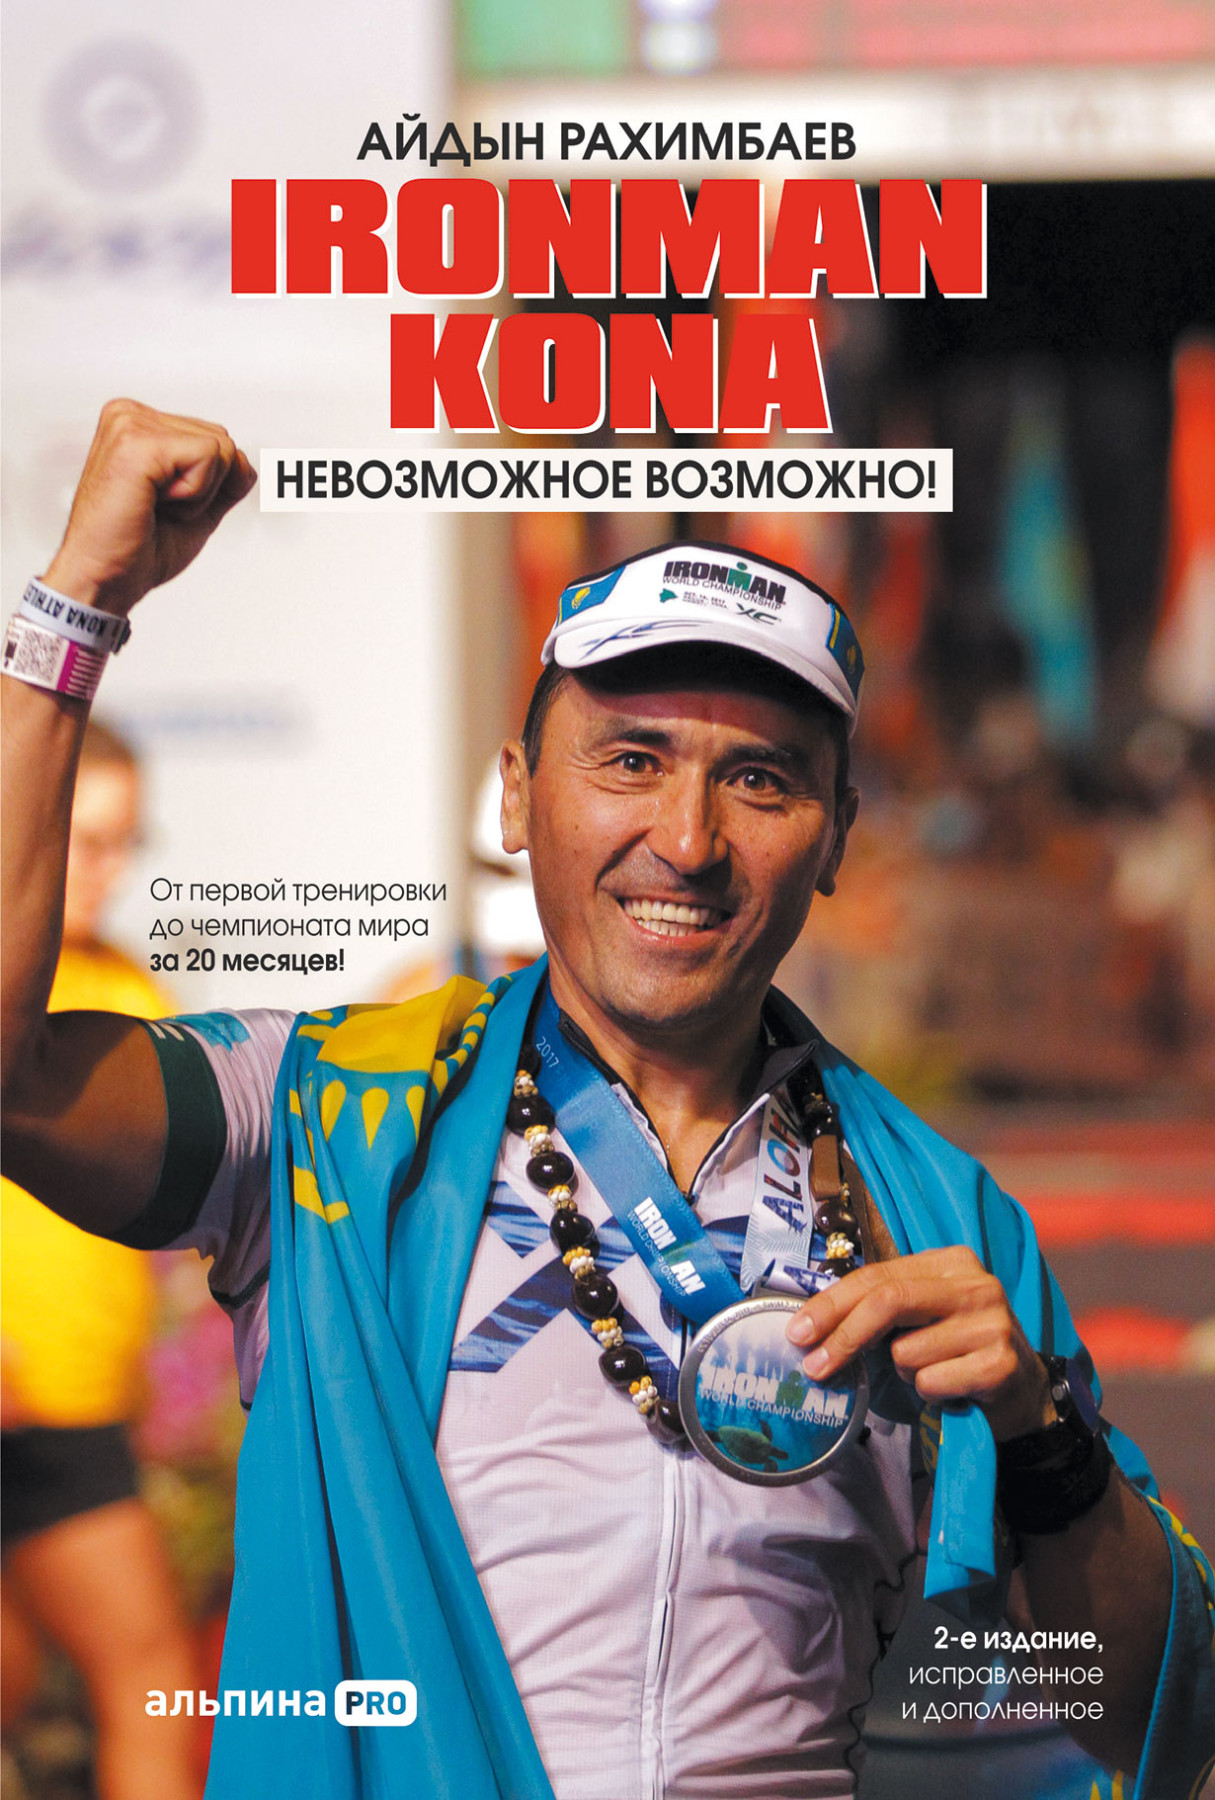 Ironman Kona обложка.